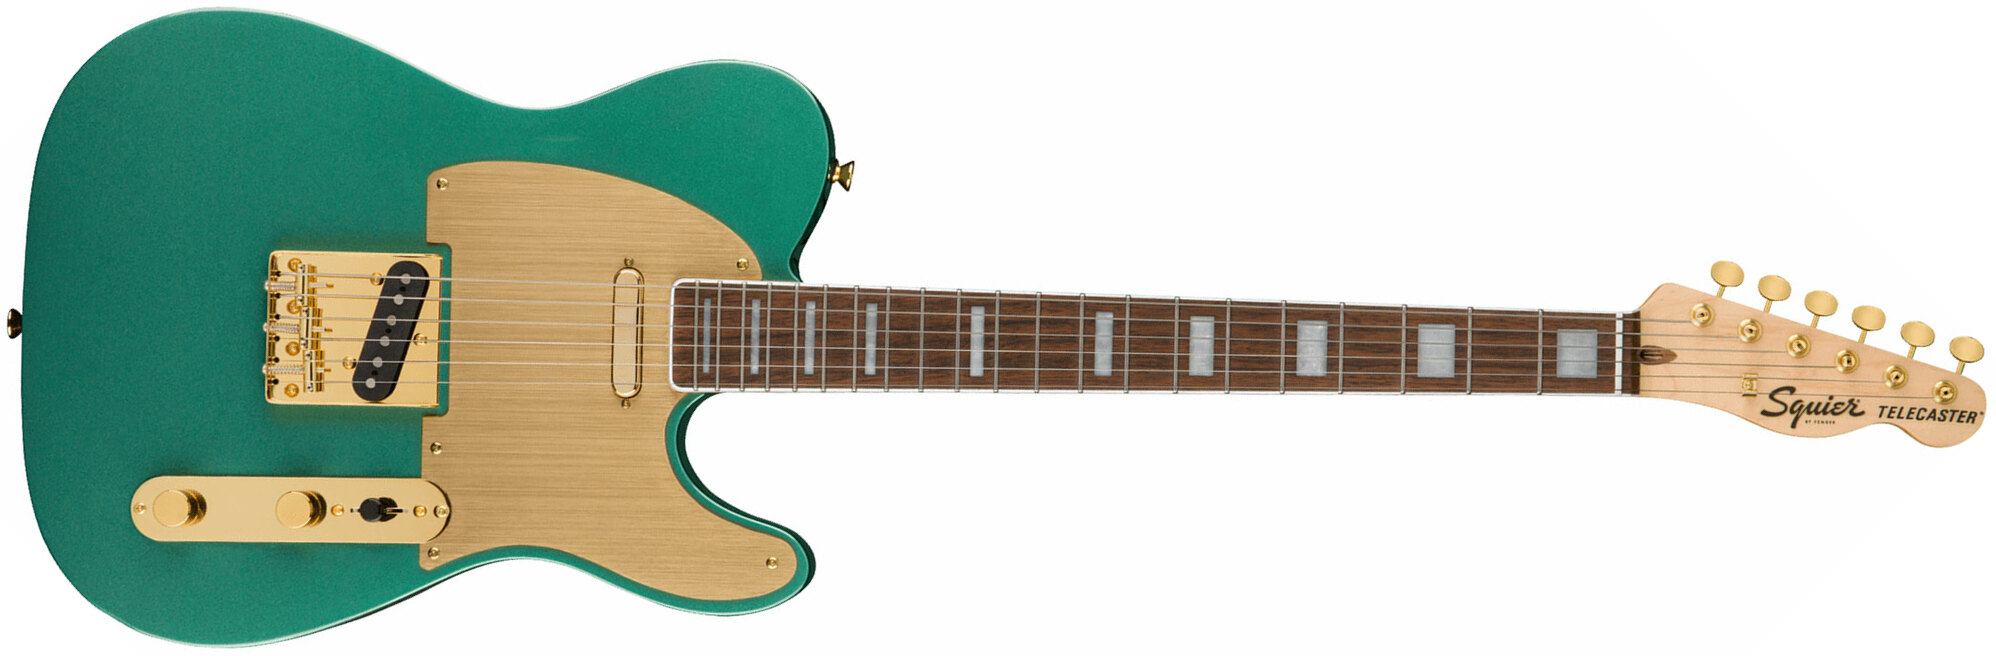 Squier Tele 40th Anniversary Gold Edition Lau - Sherwood Green Metallic - Guitarra eléctrica con forma de tel - Main picture